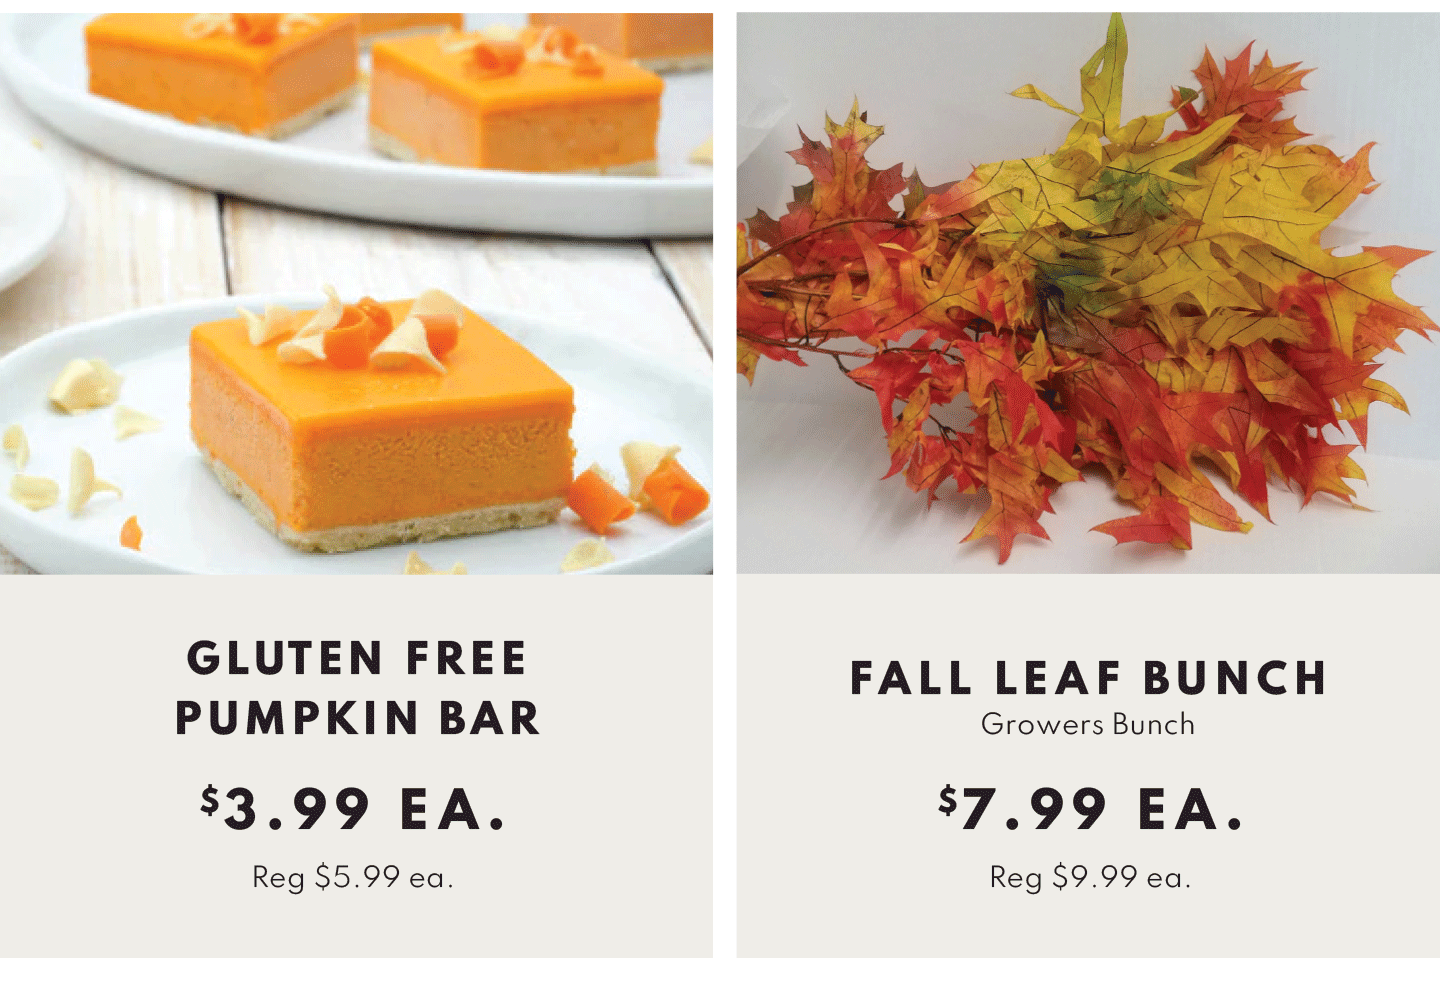 Gluten Free Pumpkin Bar $3.99 ea and Fall Leaf Bunch $7.99 ea